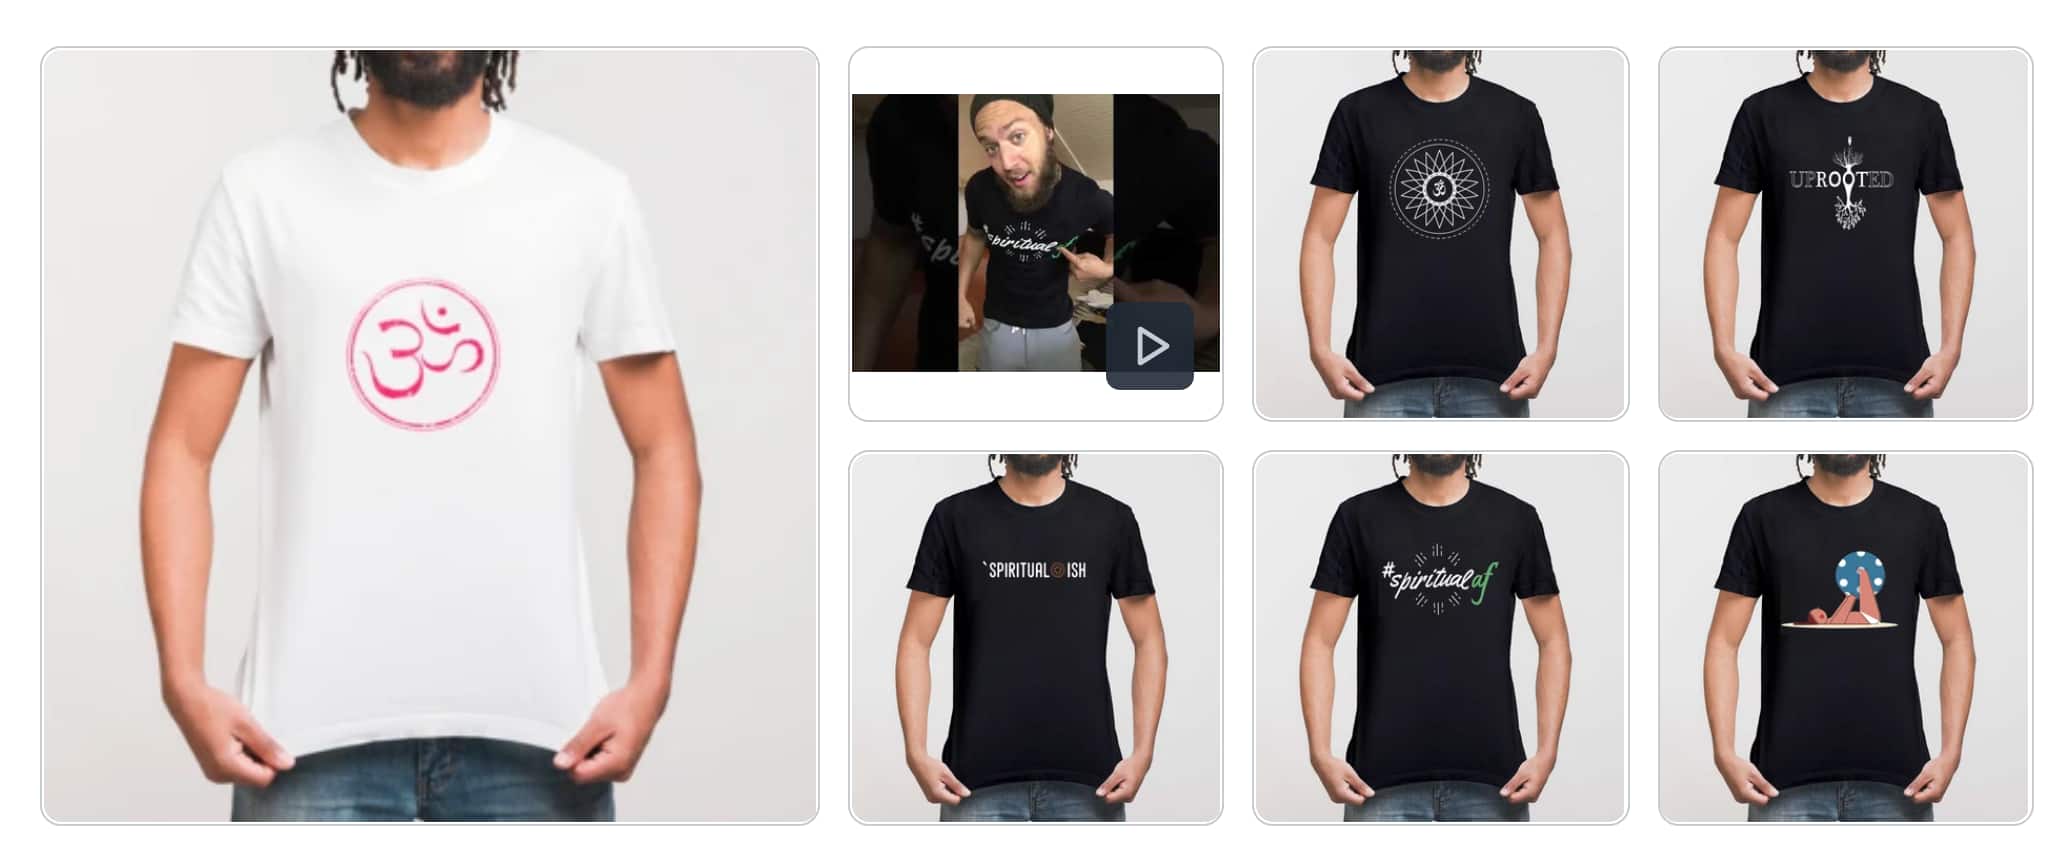 6-Pack Slashare 100% Cotton Men's T-Shirts w/ Different Designs $19 + Free Shipping @Slashare